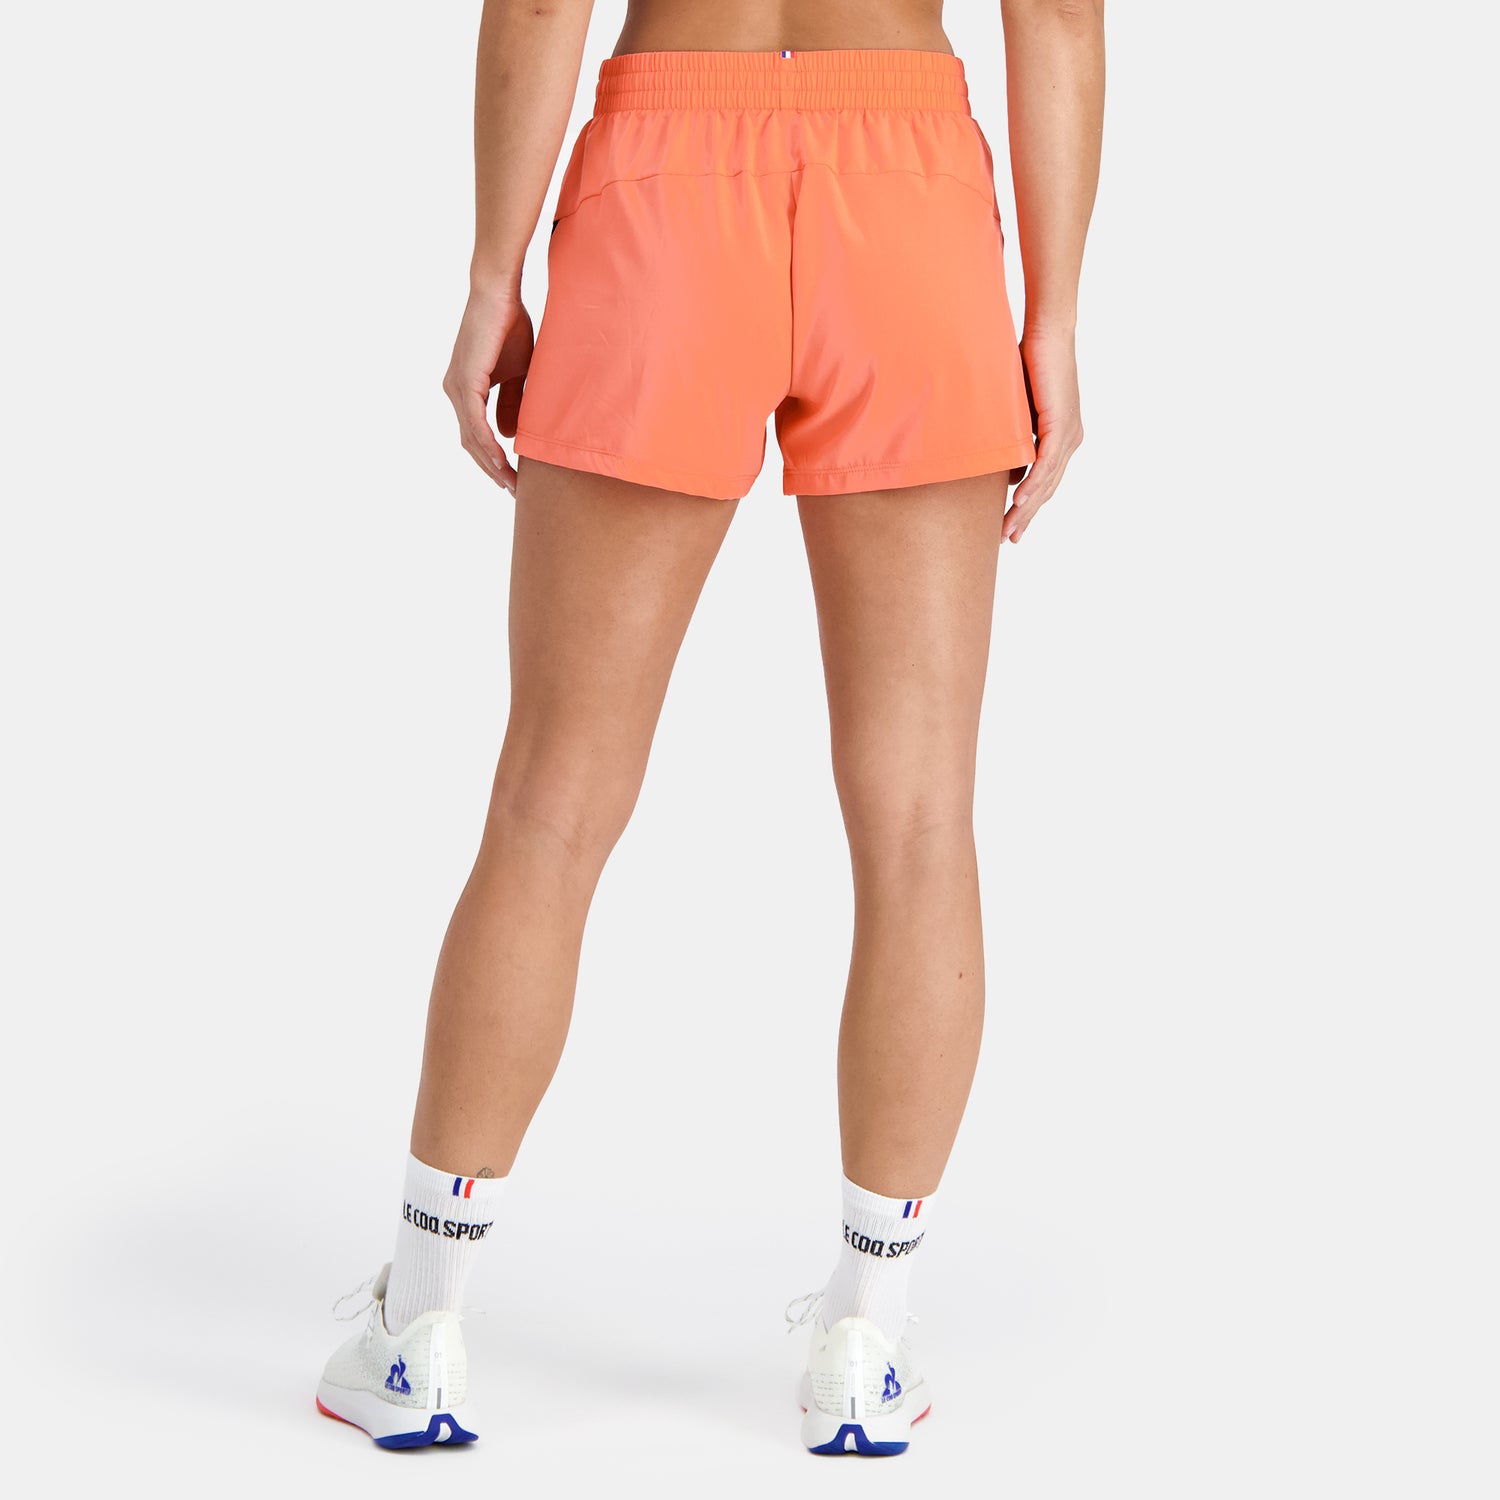 2410238-TRAINING Short N°1 W orange perf/black  | Shorts for women